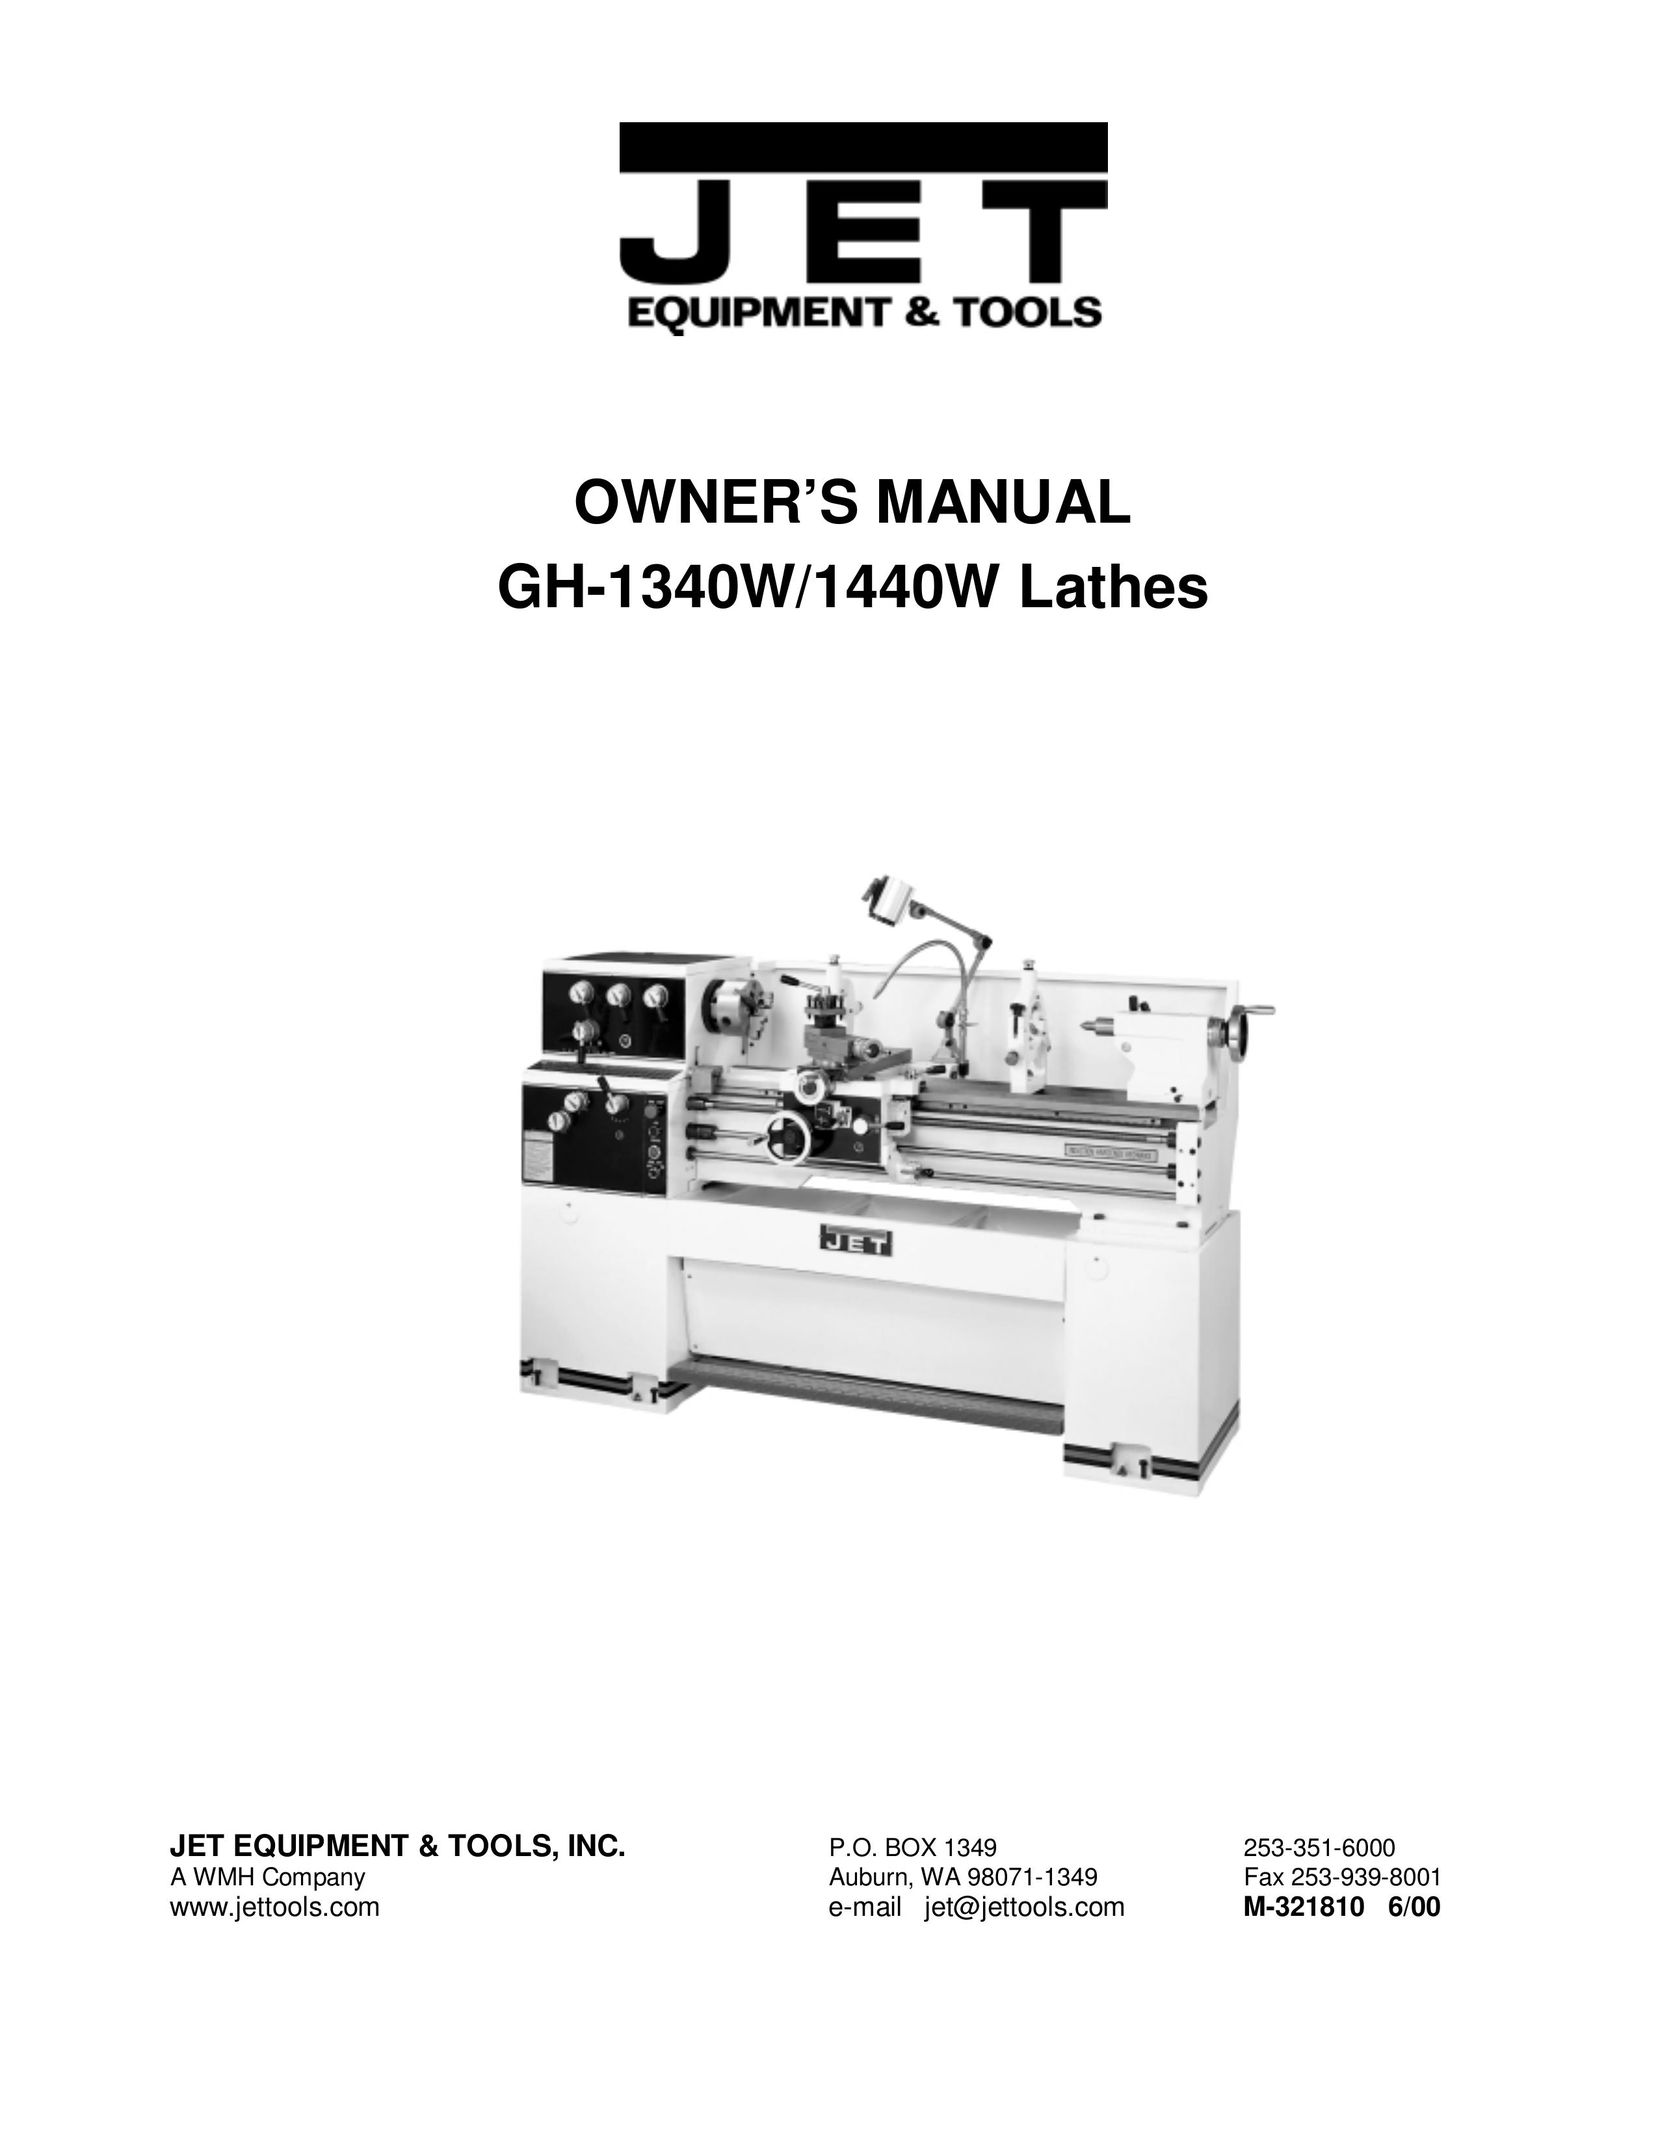 Jet Tools GH-1340W Lathe User Manual